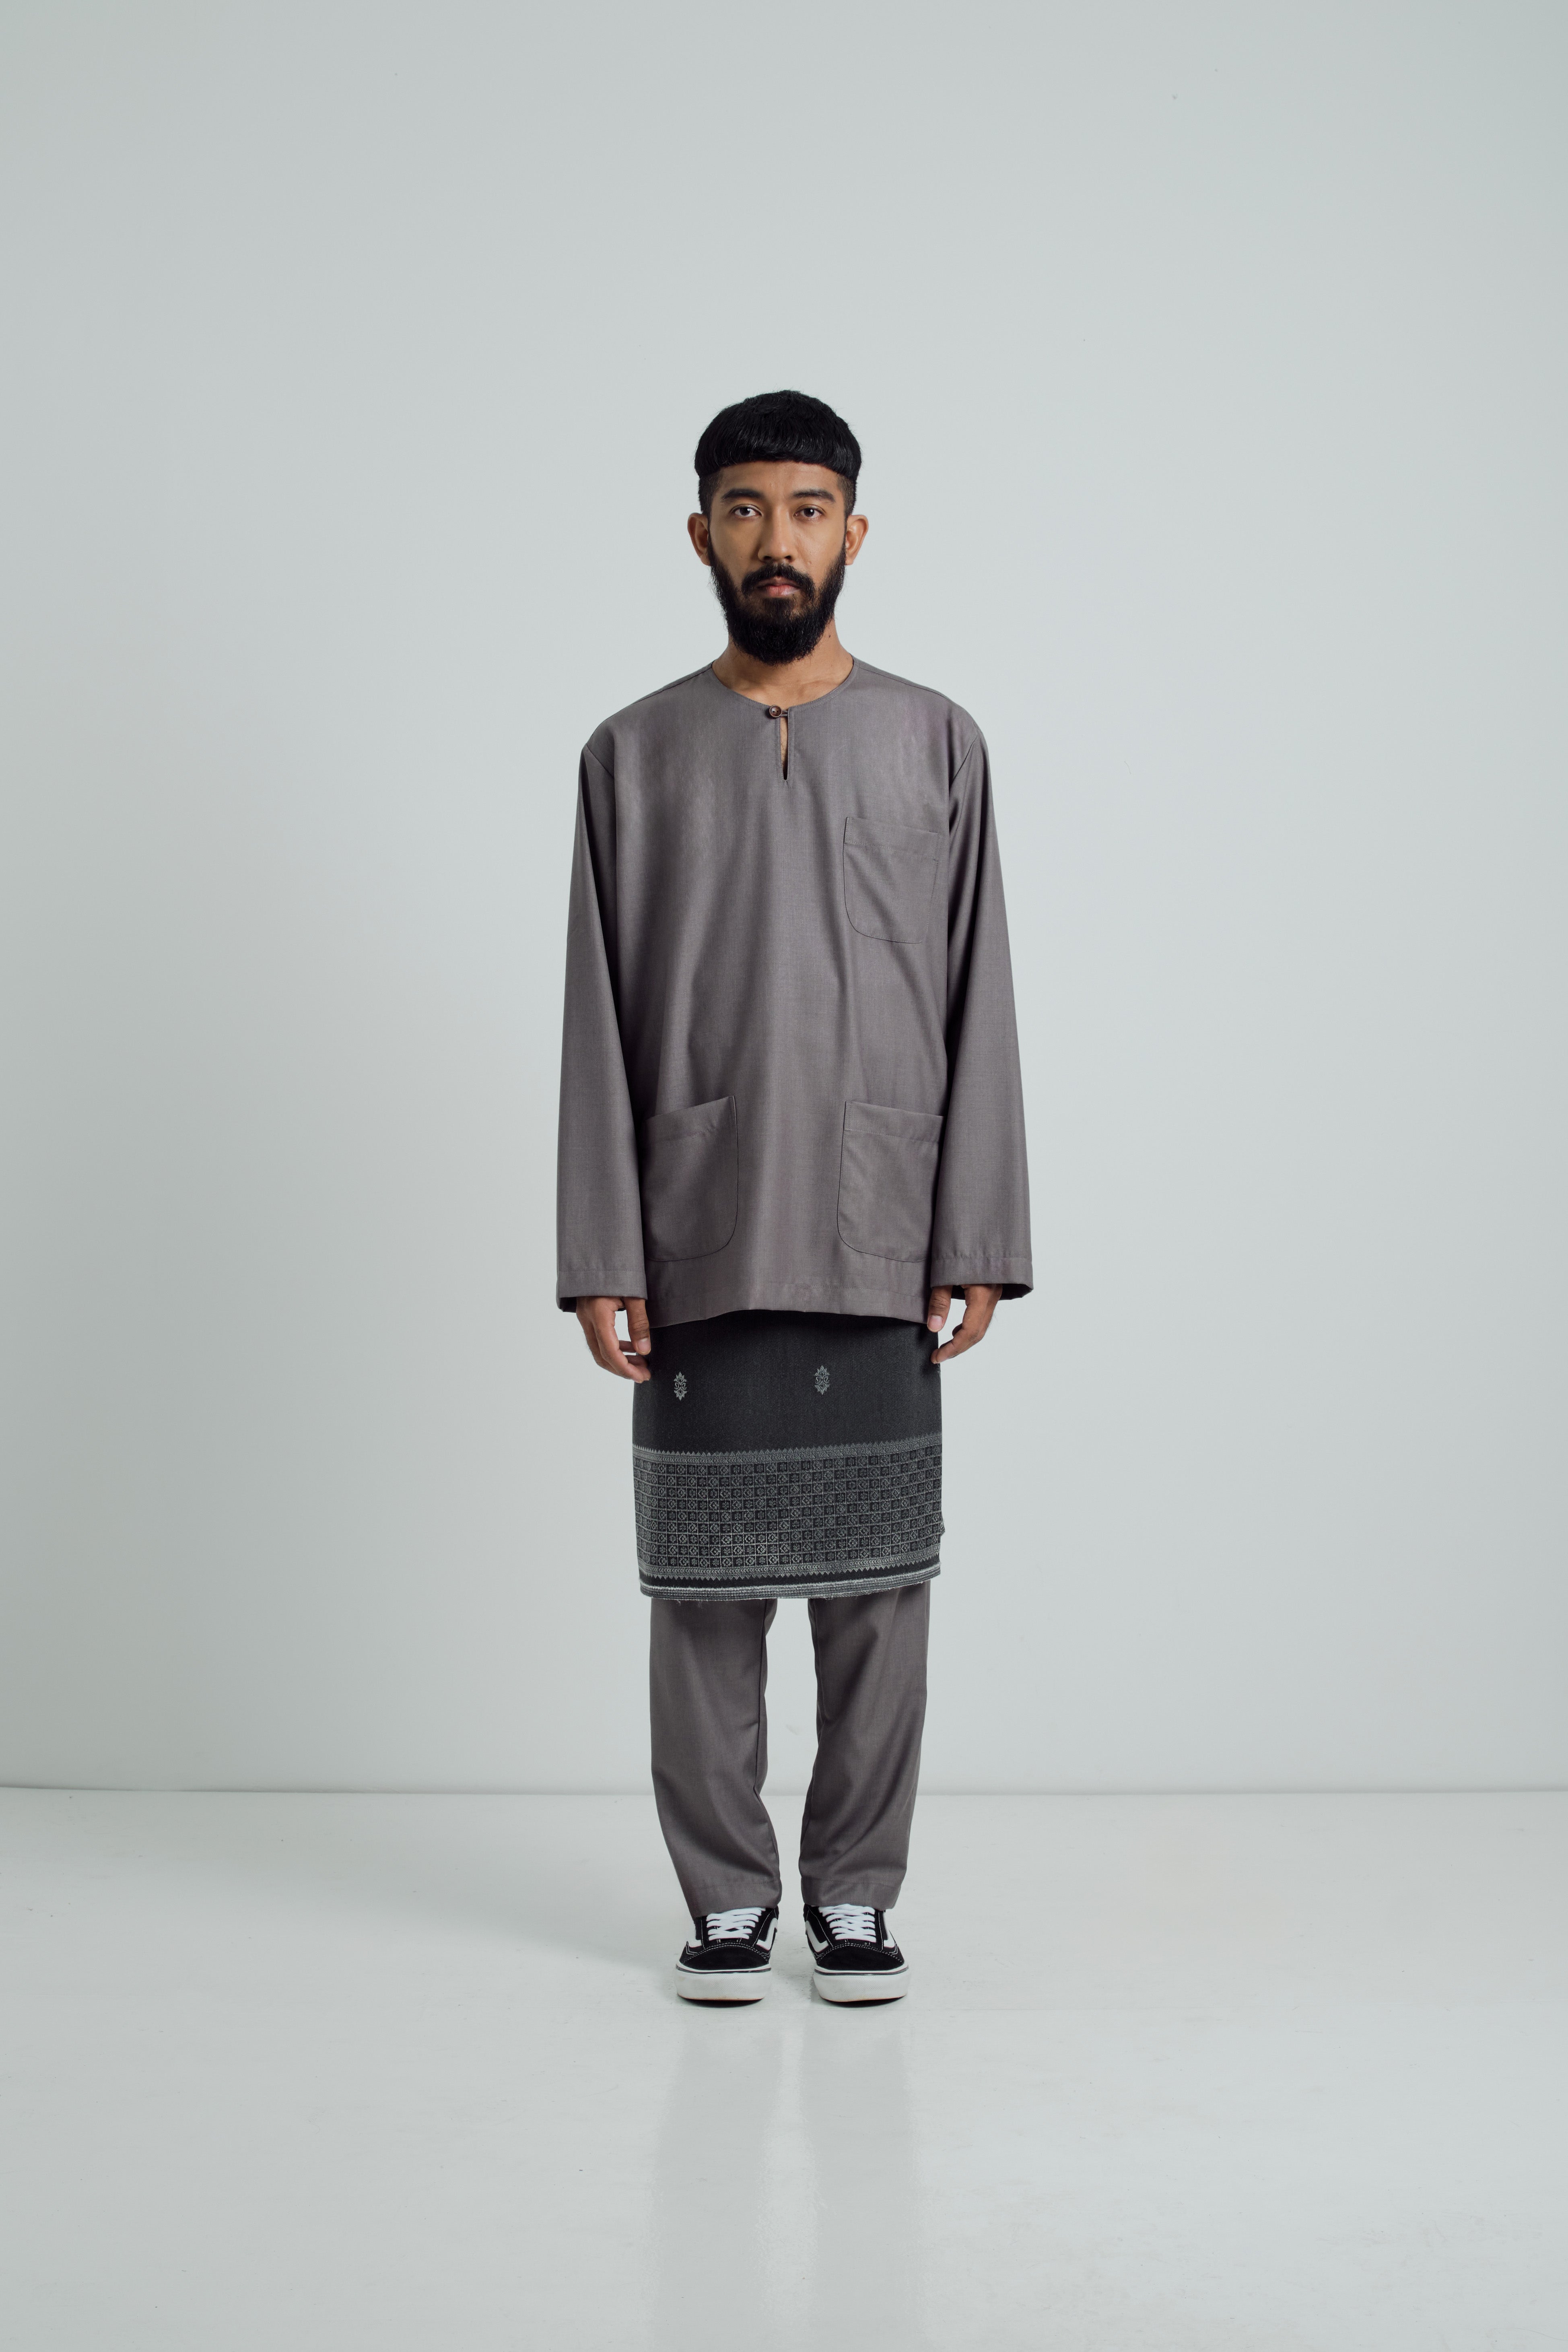 Patawali Classic Fit Baju Melayu Teluk Belanga - Dim Grey